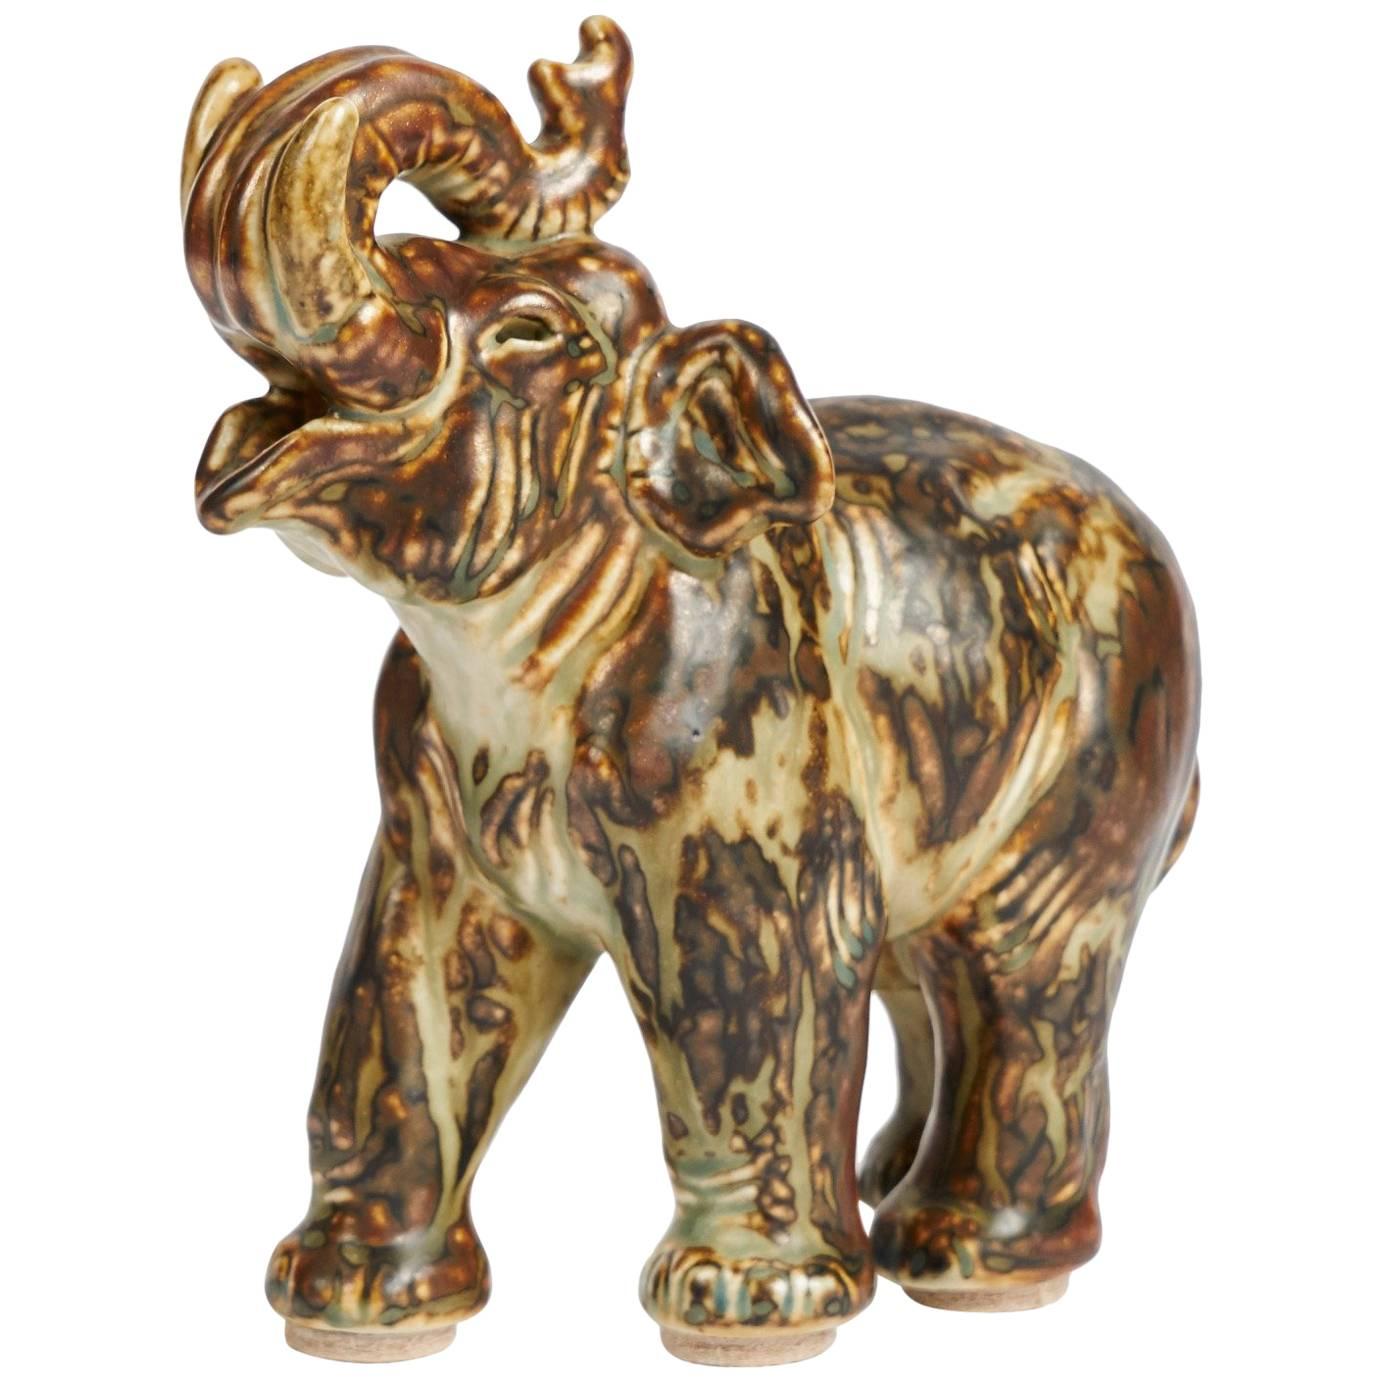 Knud Khyn for Royal Copenhagen, Ceramic Elephant, Denmark, circa 1930s